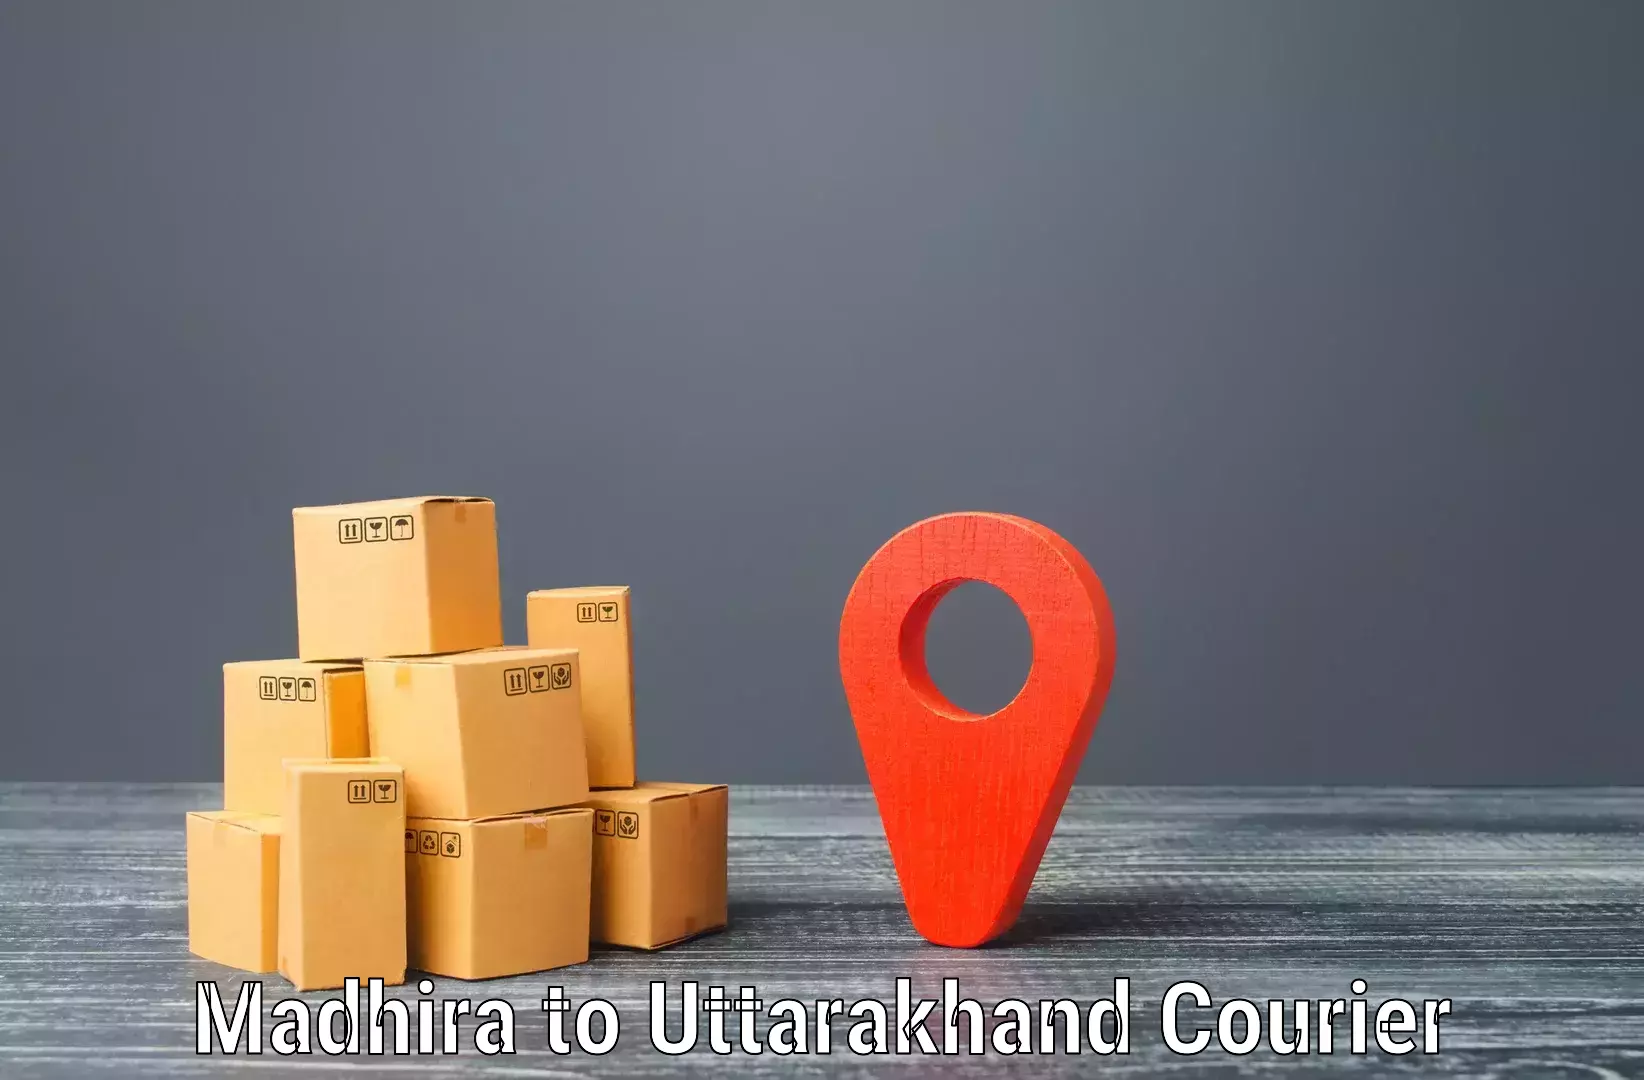 Logistics service provider Madhira to Pithoragarh